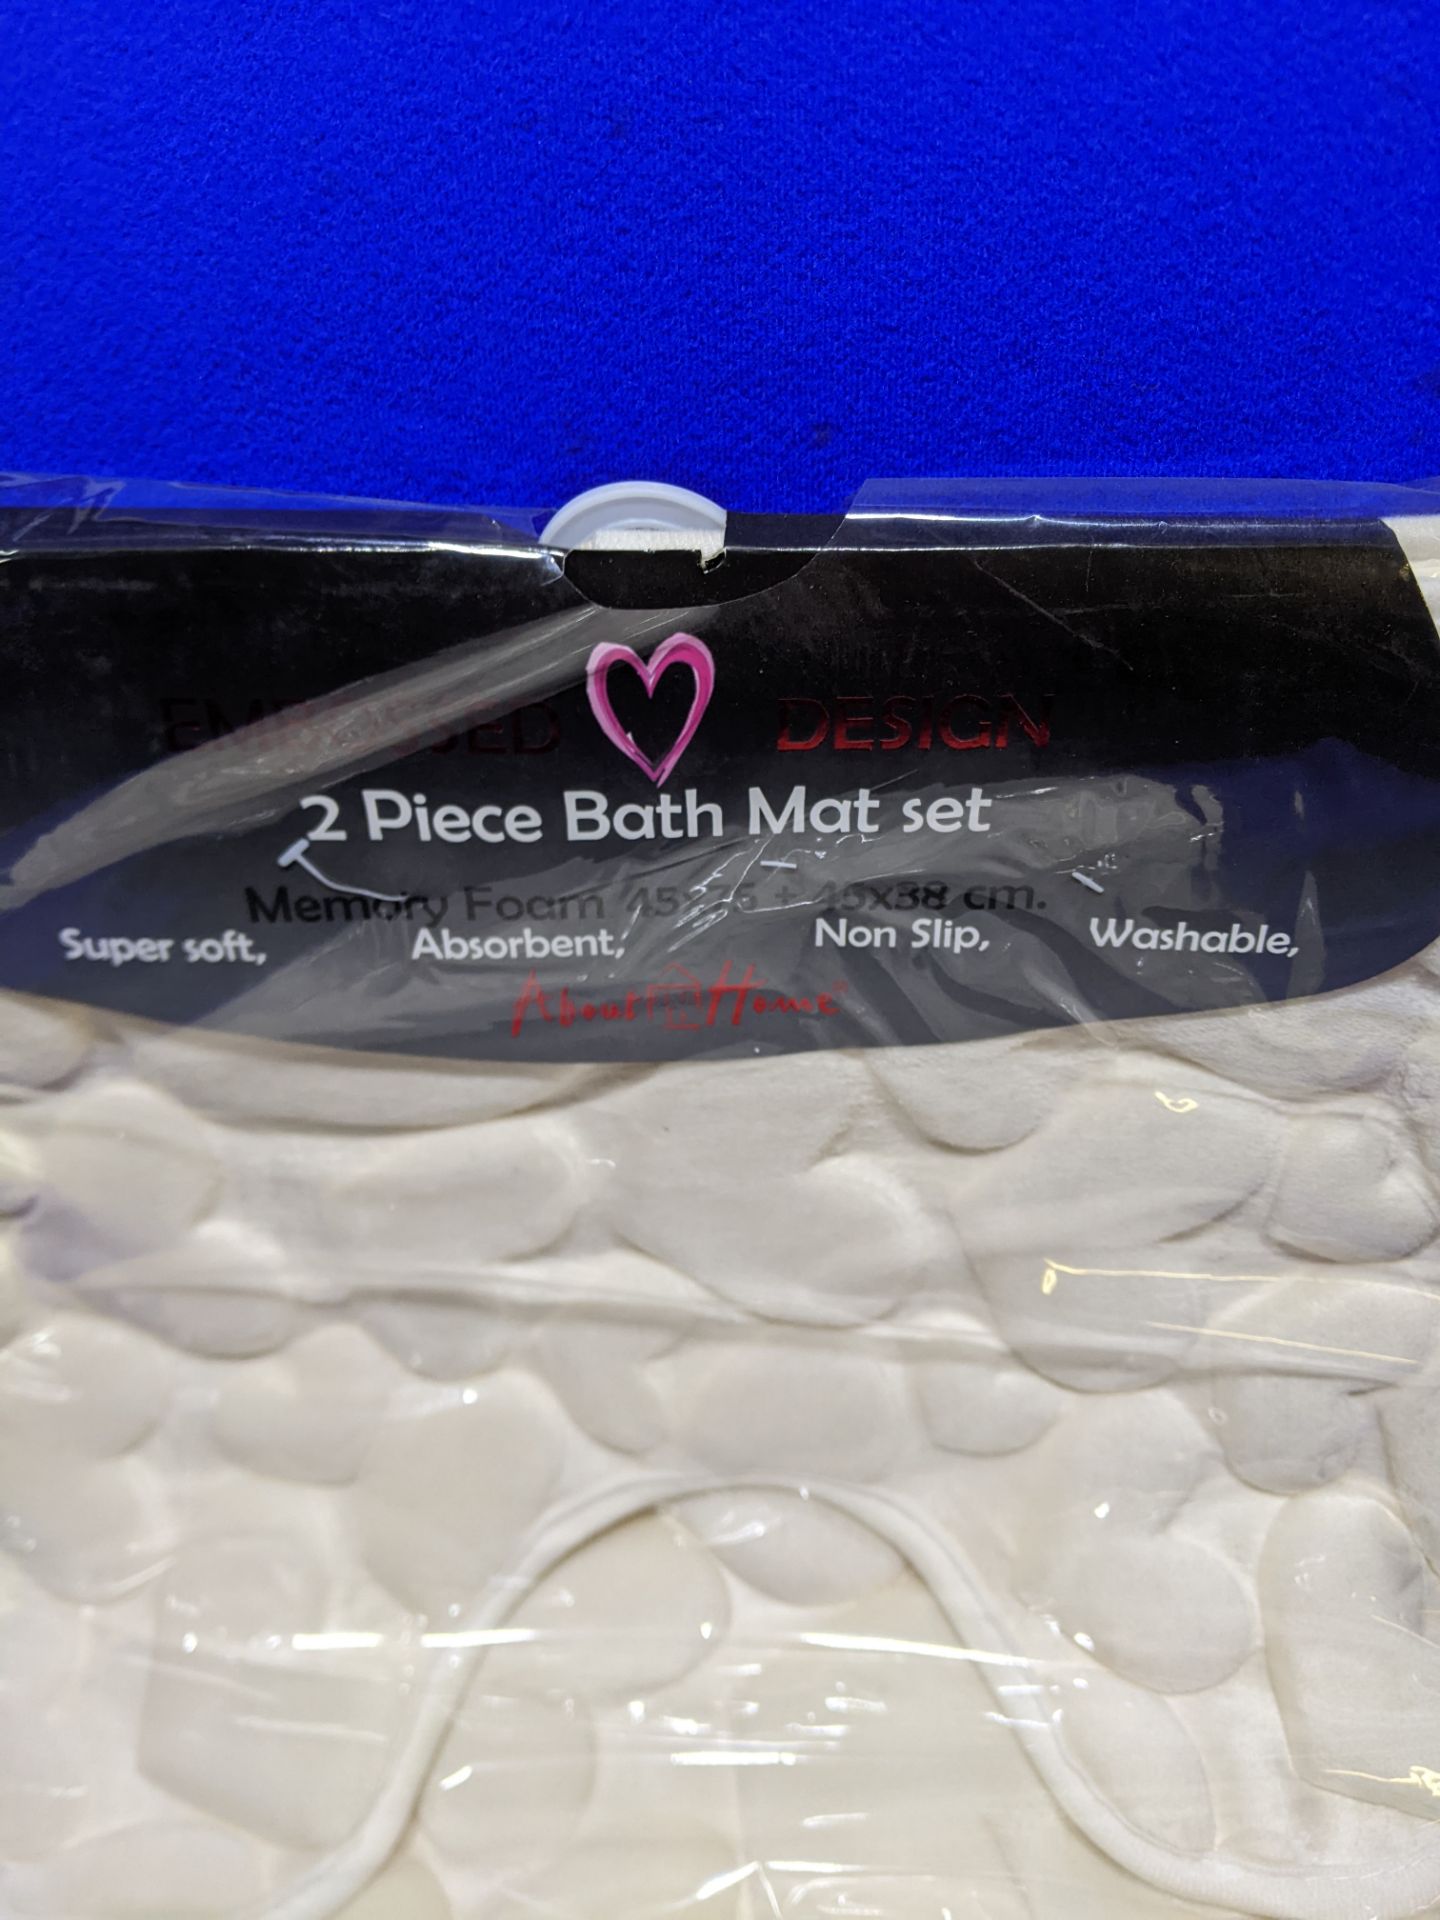 11 x Embossed Designed 2 Piece Cream Bath Mat Sets - Image 2 of 4